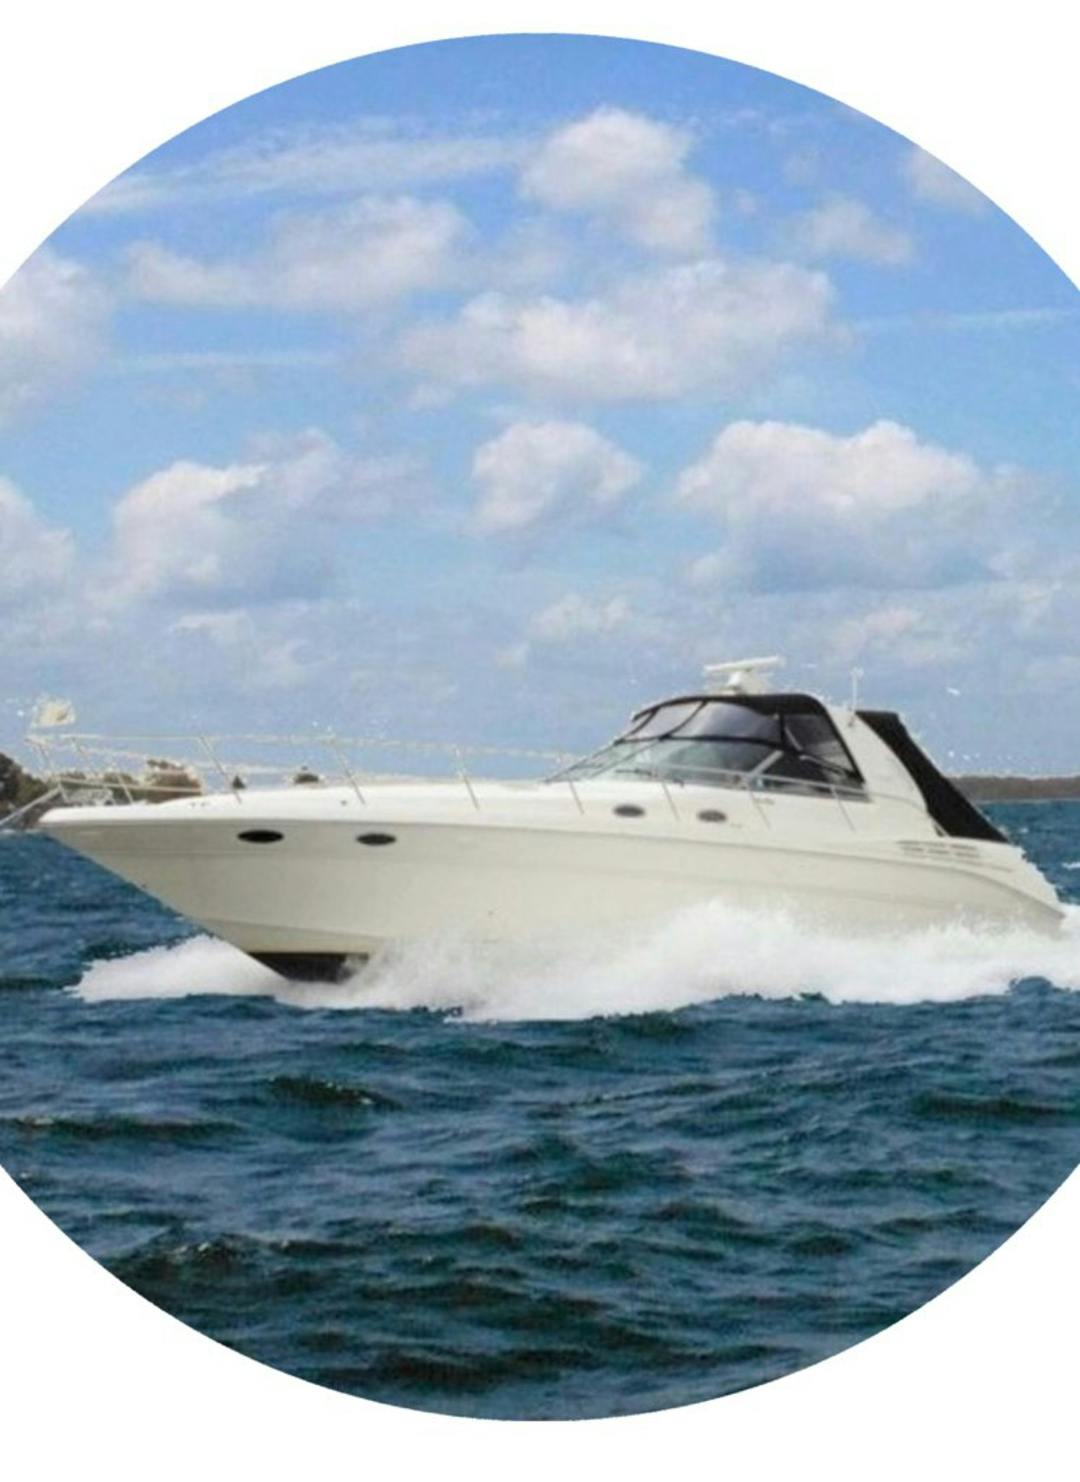 45 Sea Ray luxury charter yacht - James Creek Marina, V Street Southwest, Washington, DC, USA